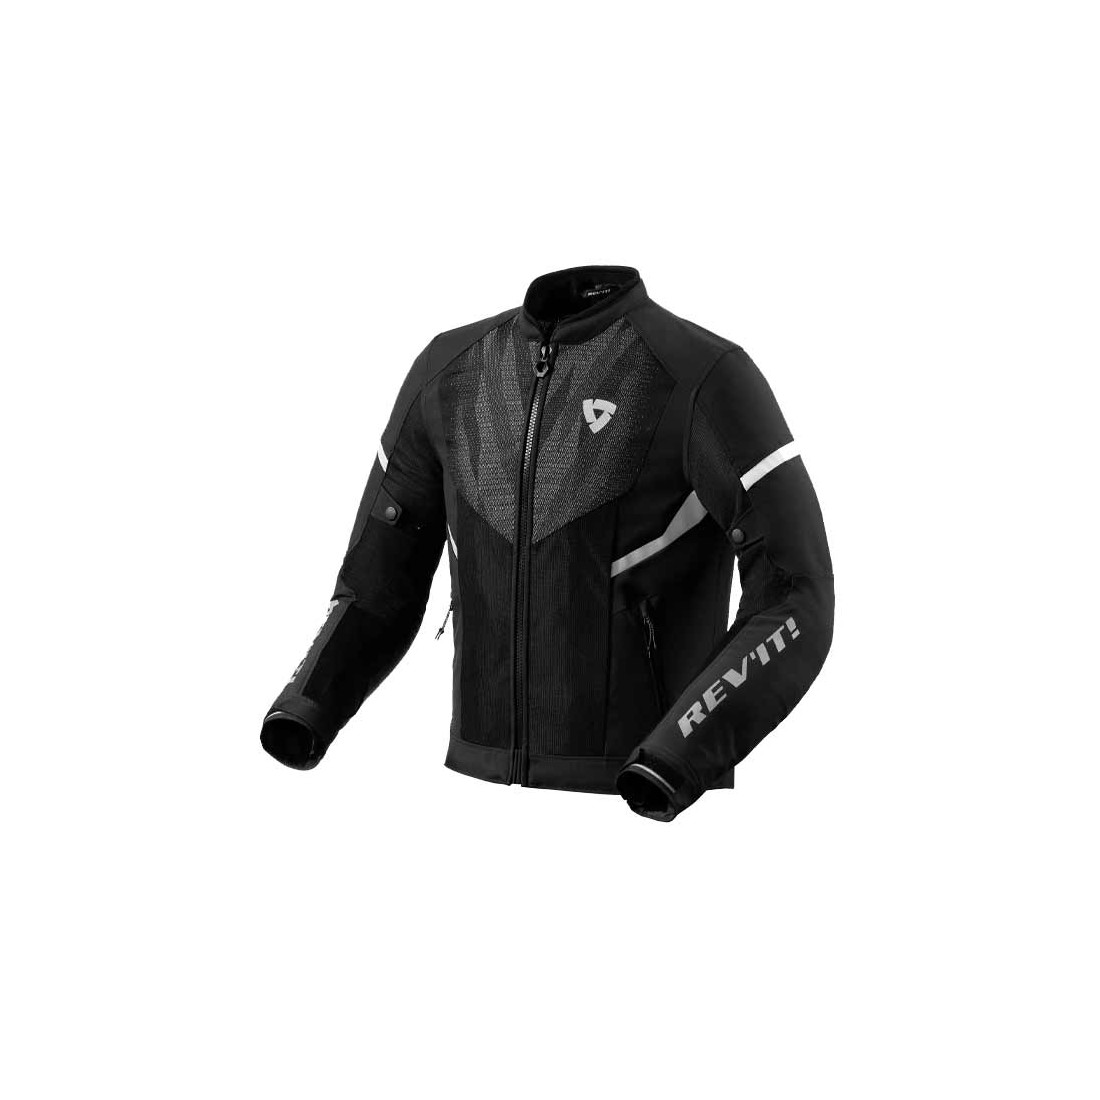 Revit Hyperspeed 2 GT Air black white jacket